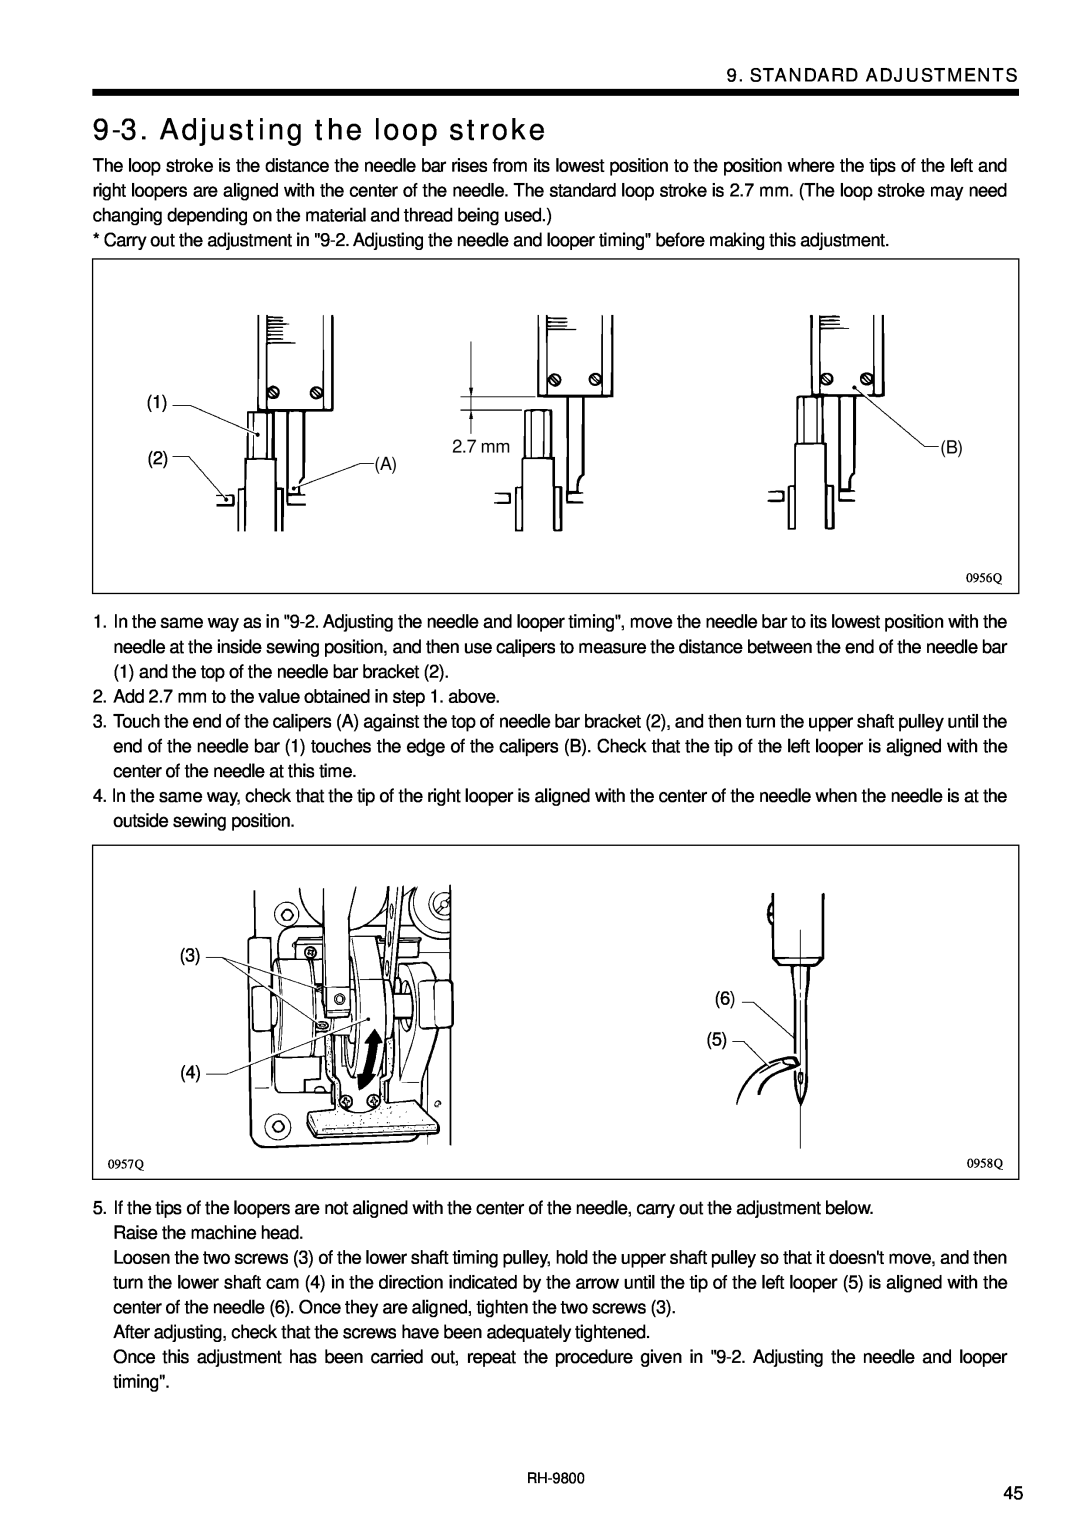 Brother DH4-B980 instruction manual Adjusting the loop stroke, Standard Adjustments 